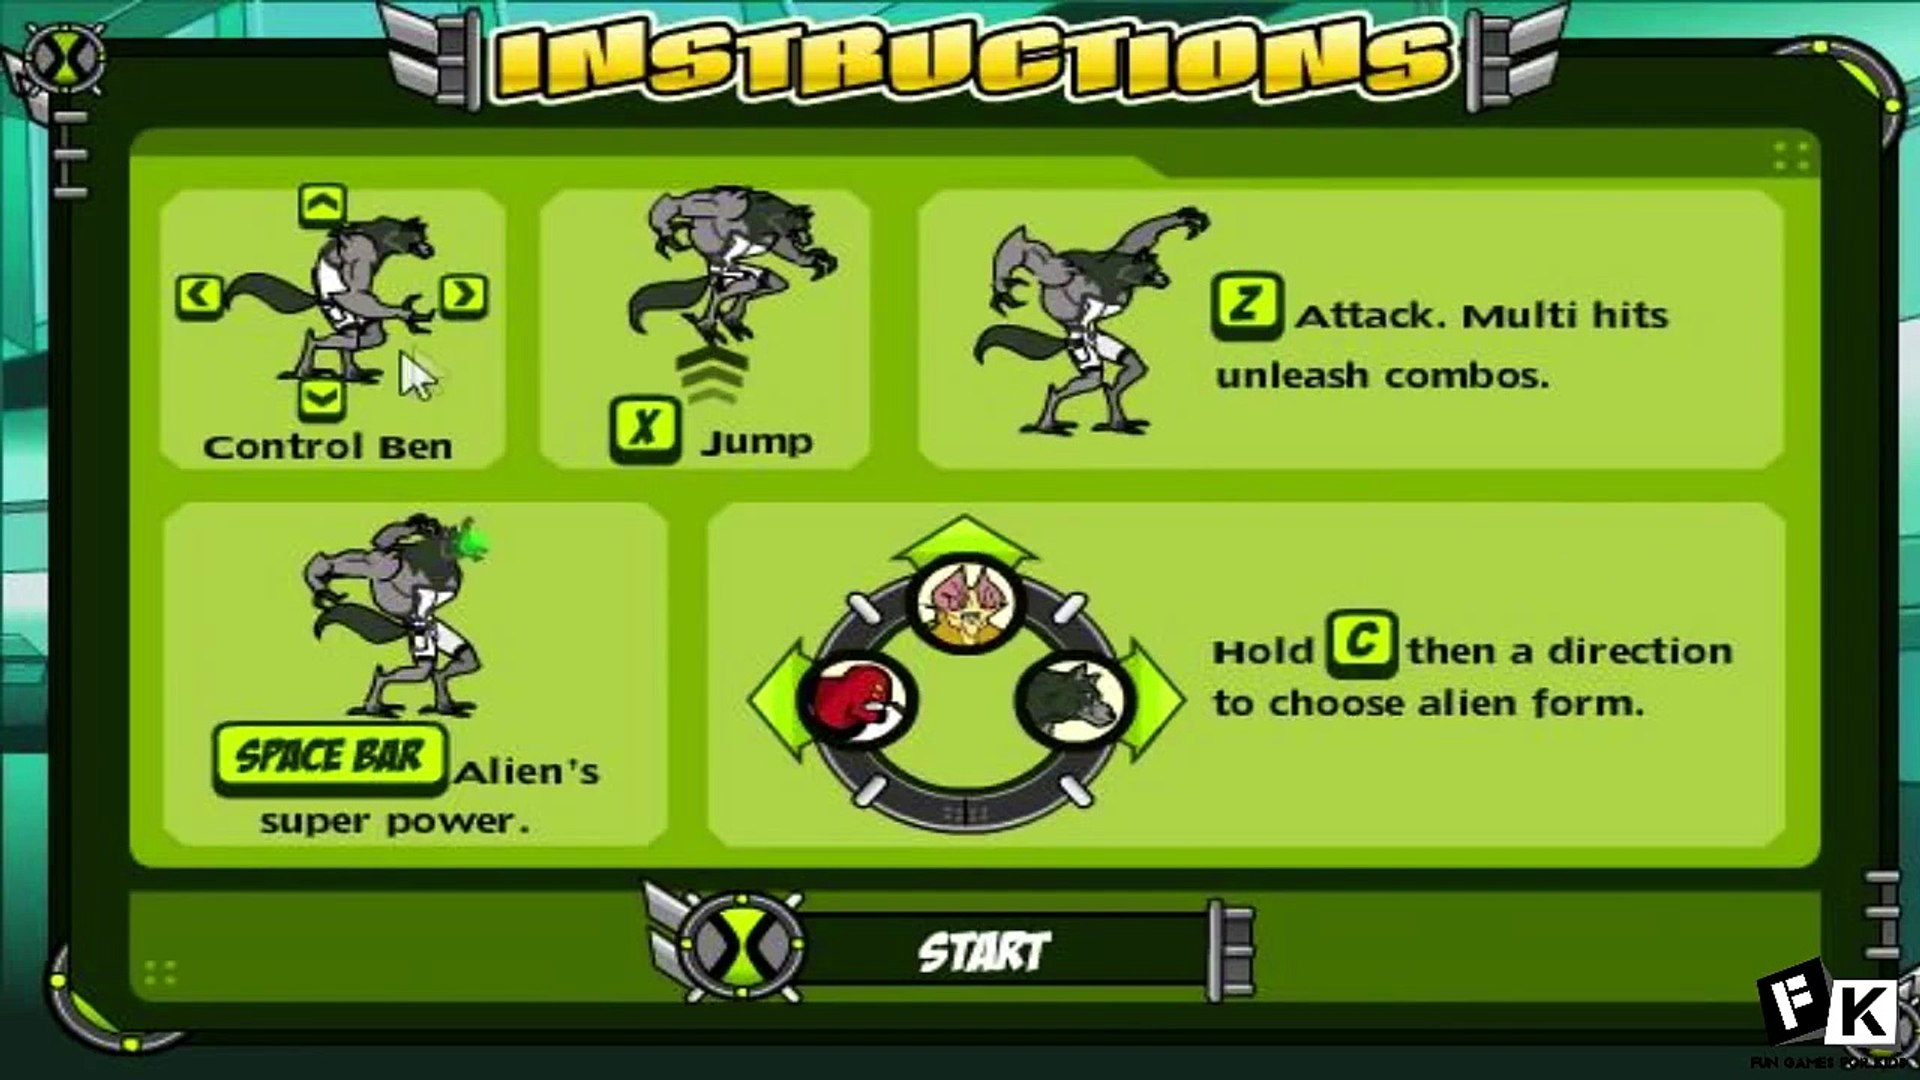 Cartoon Network Games Ben 10 Omnitrix Unleashed - video Dailymotion